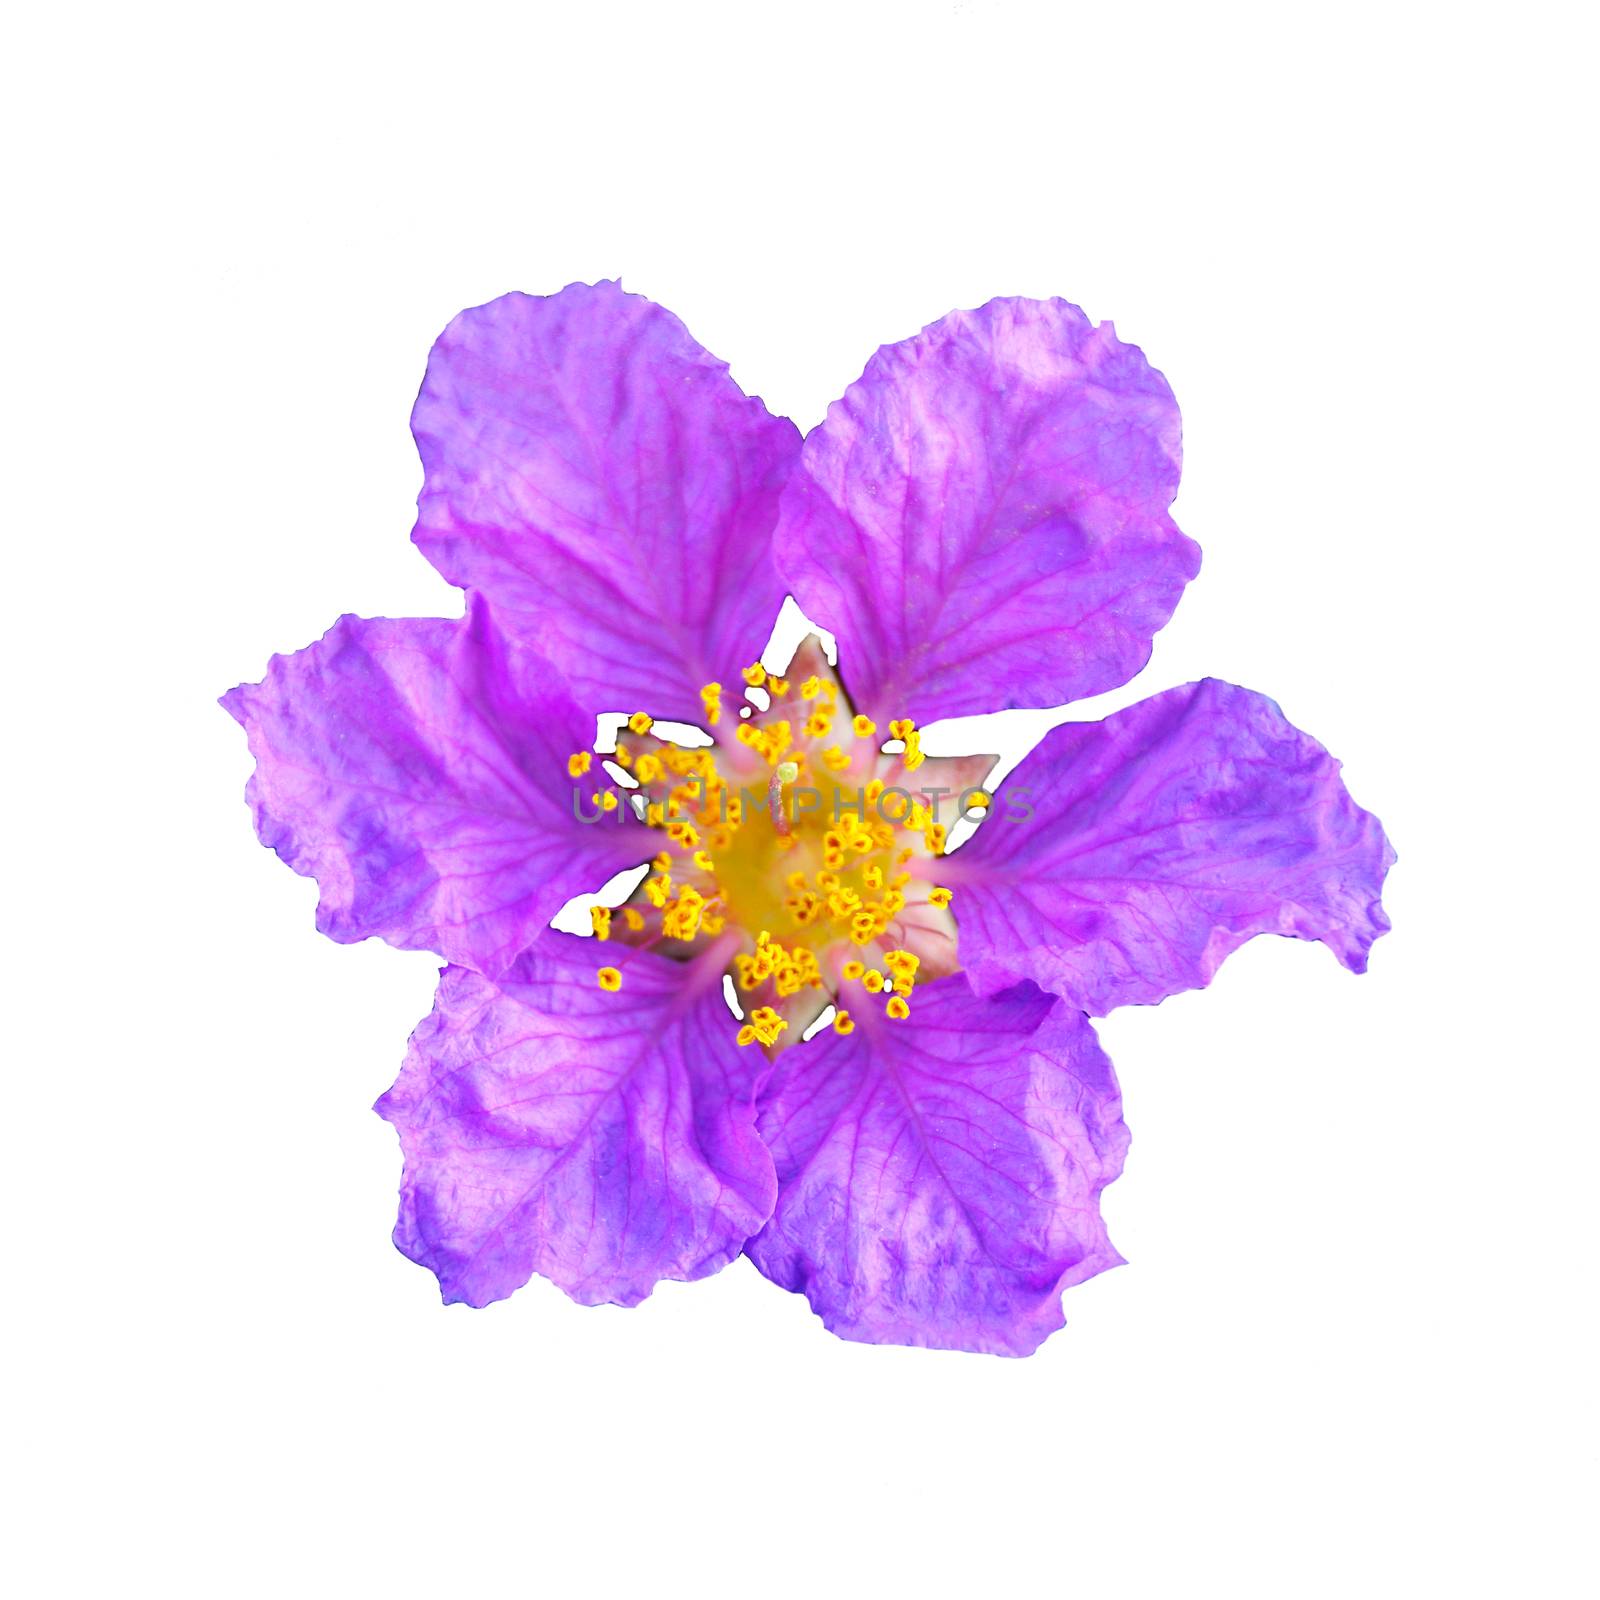 Violet color of Queen's crape myrtle flower. by Noppharat_th